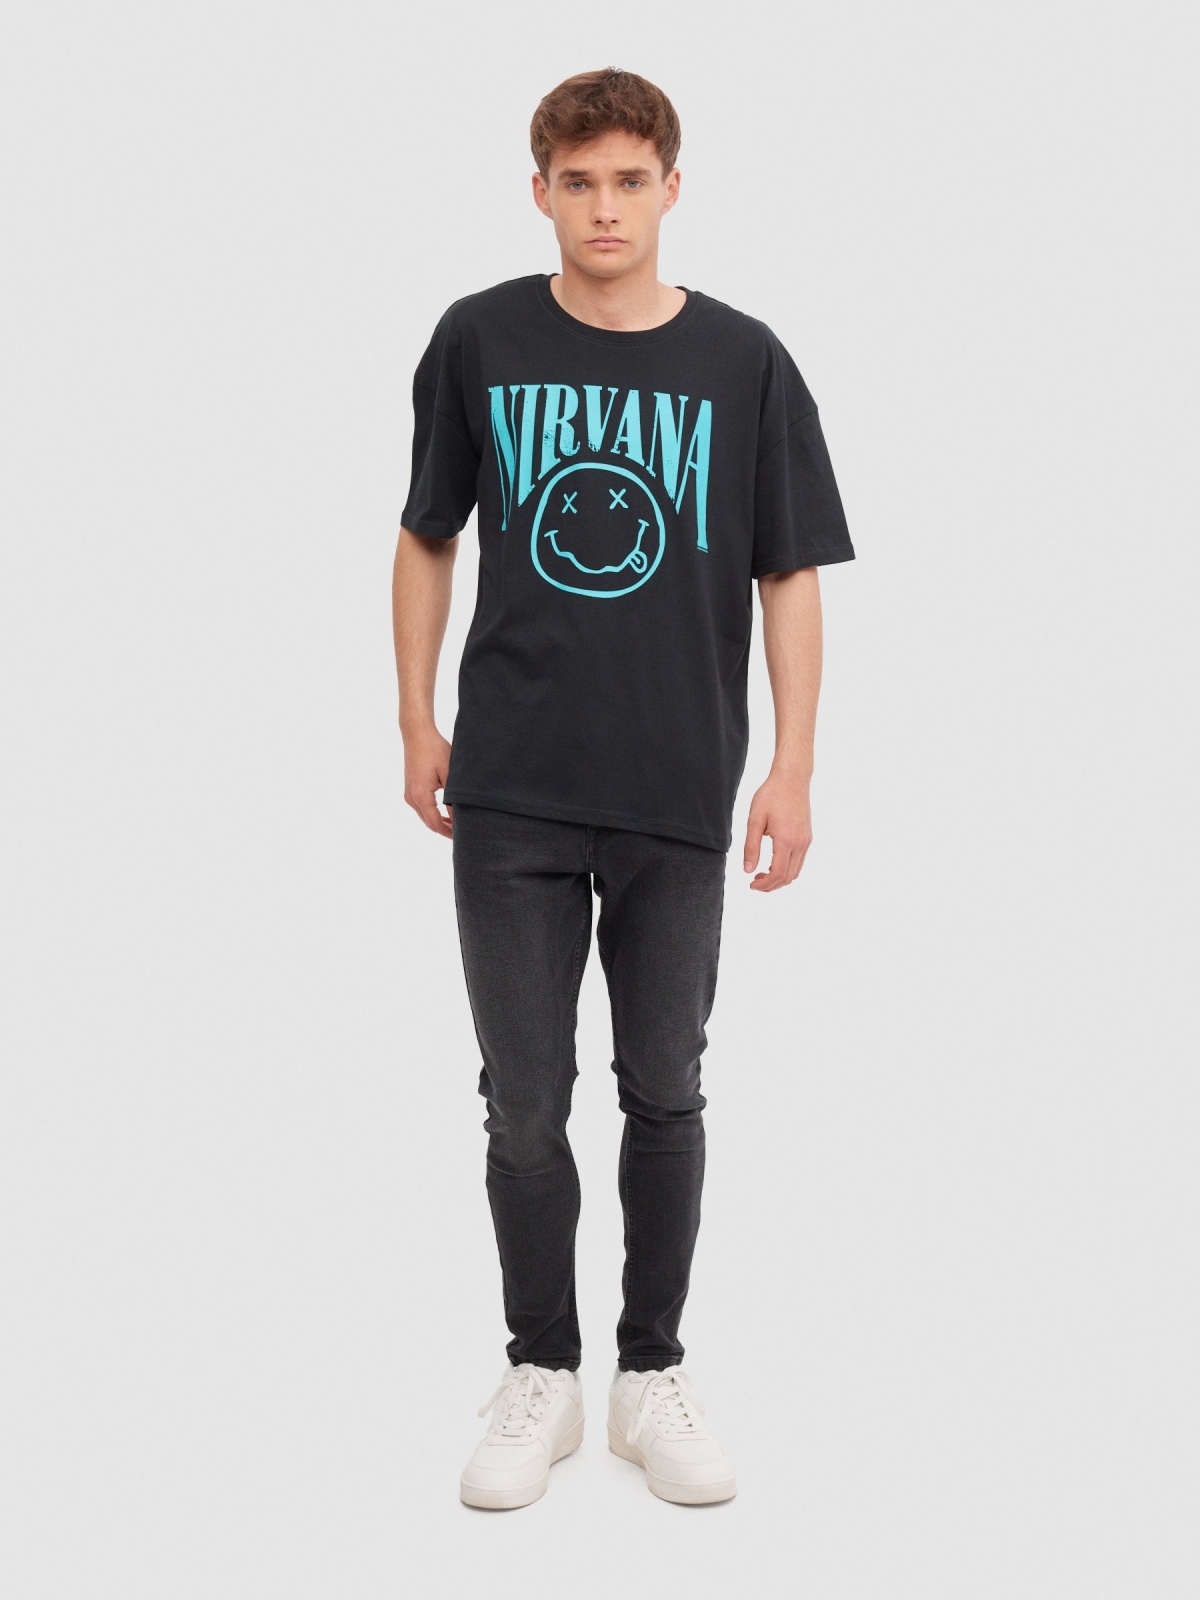 T-shirt Nirvana preto vista geral frontal